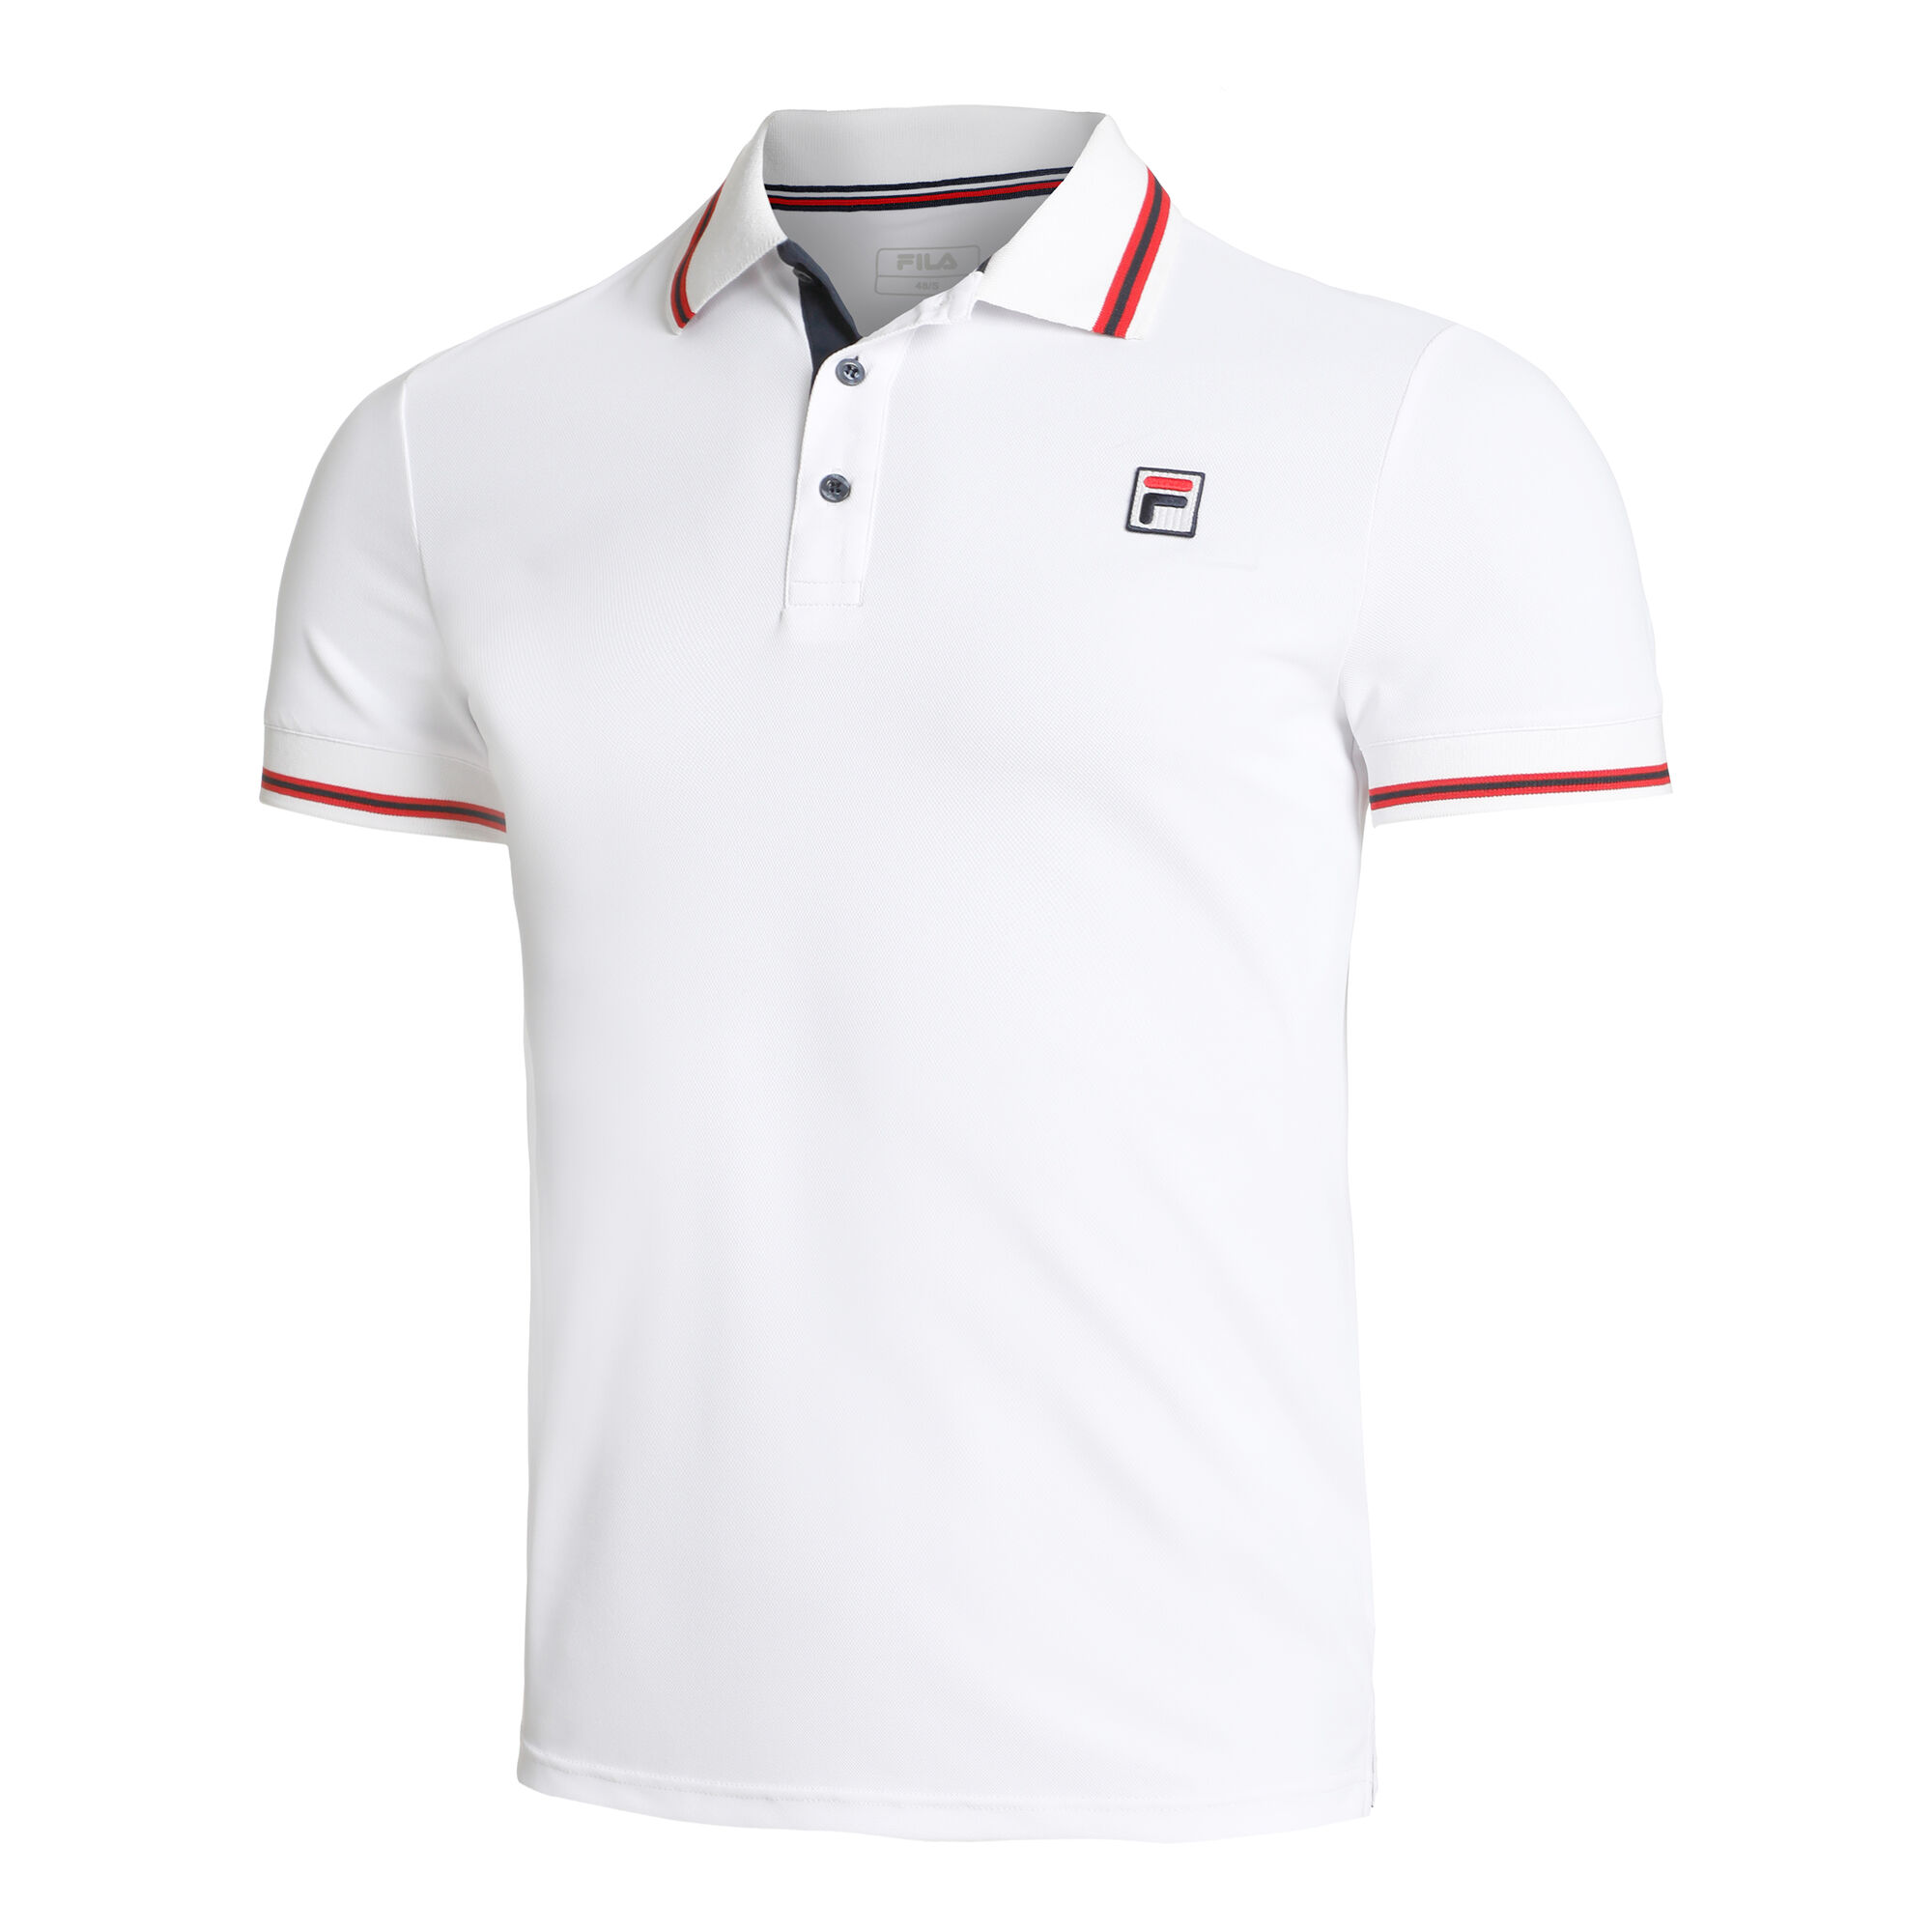 buy Core Piro Polo Men - White, Red online | Tennis-Point